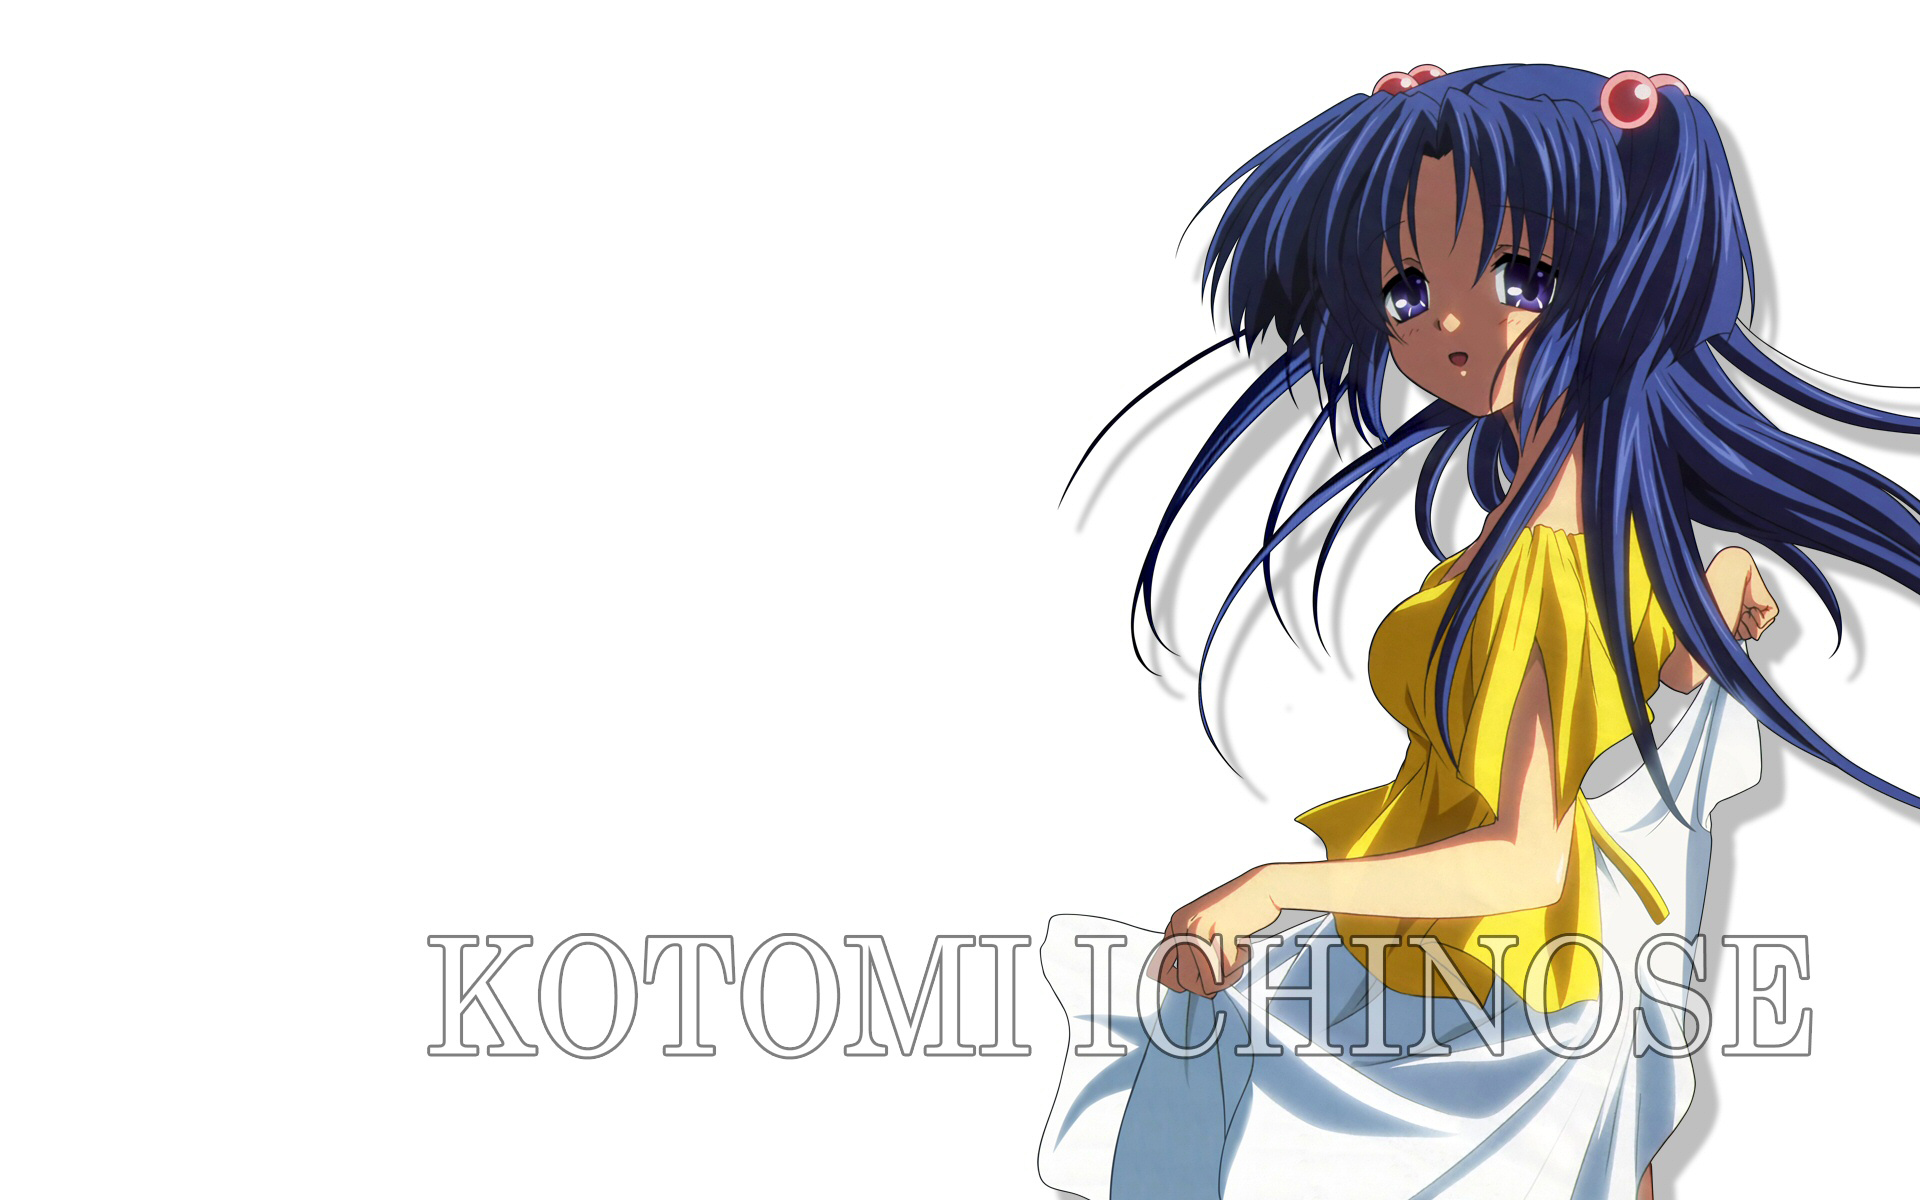 Free download wallpaper Anime, Clannad, Kotomi Ichinose on your PC desktop